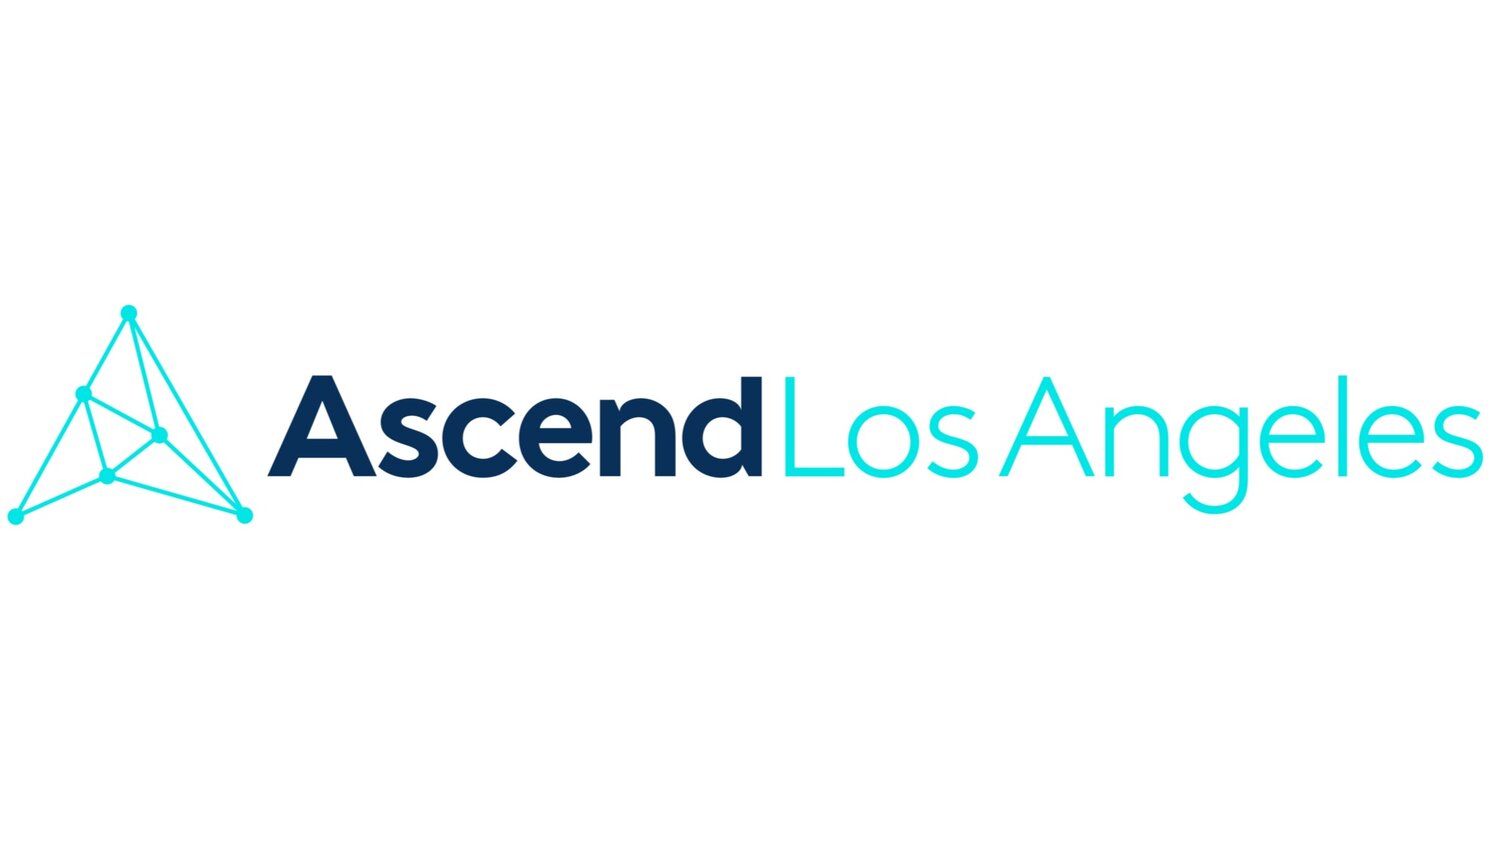 Ascend Los Angeles